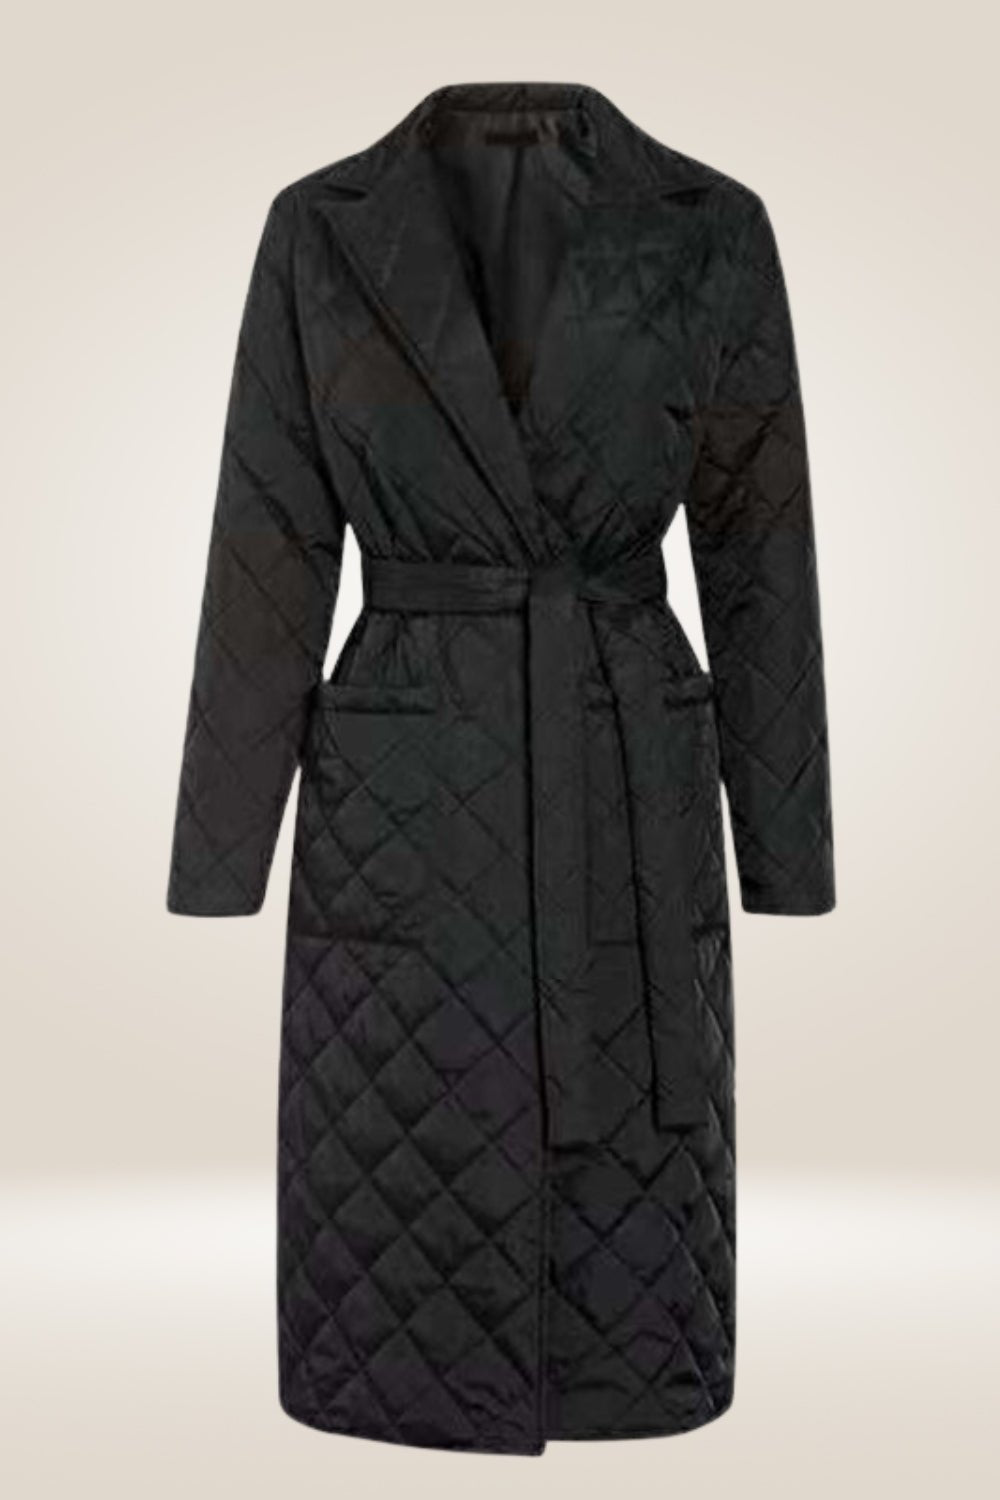 Tailored Long Parka Coat With Deep Pockets - TGC Boutique - Parka Coat